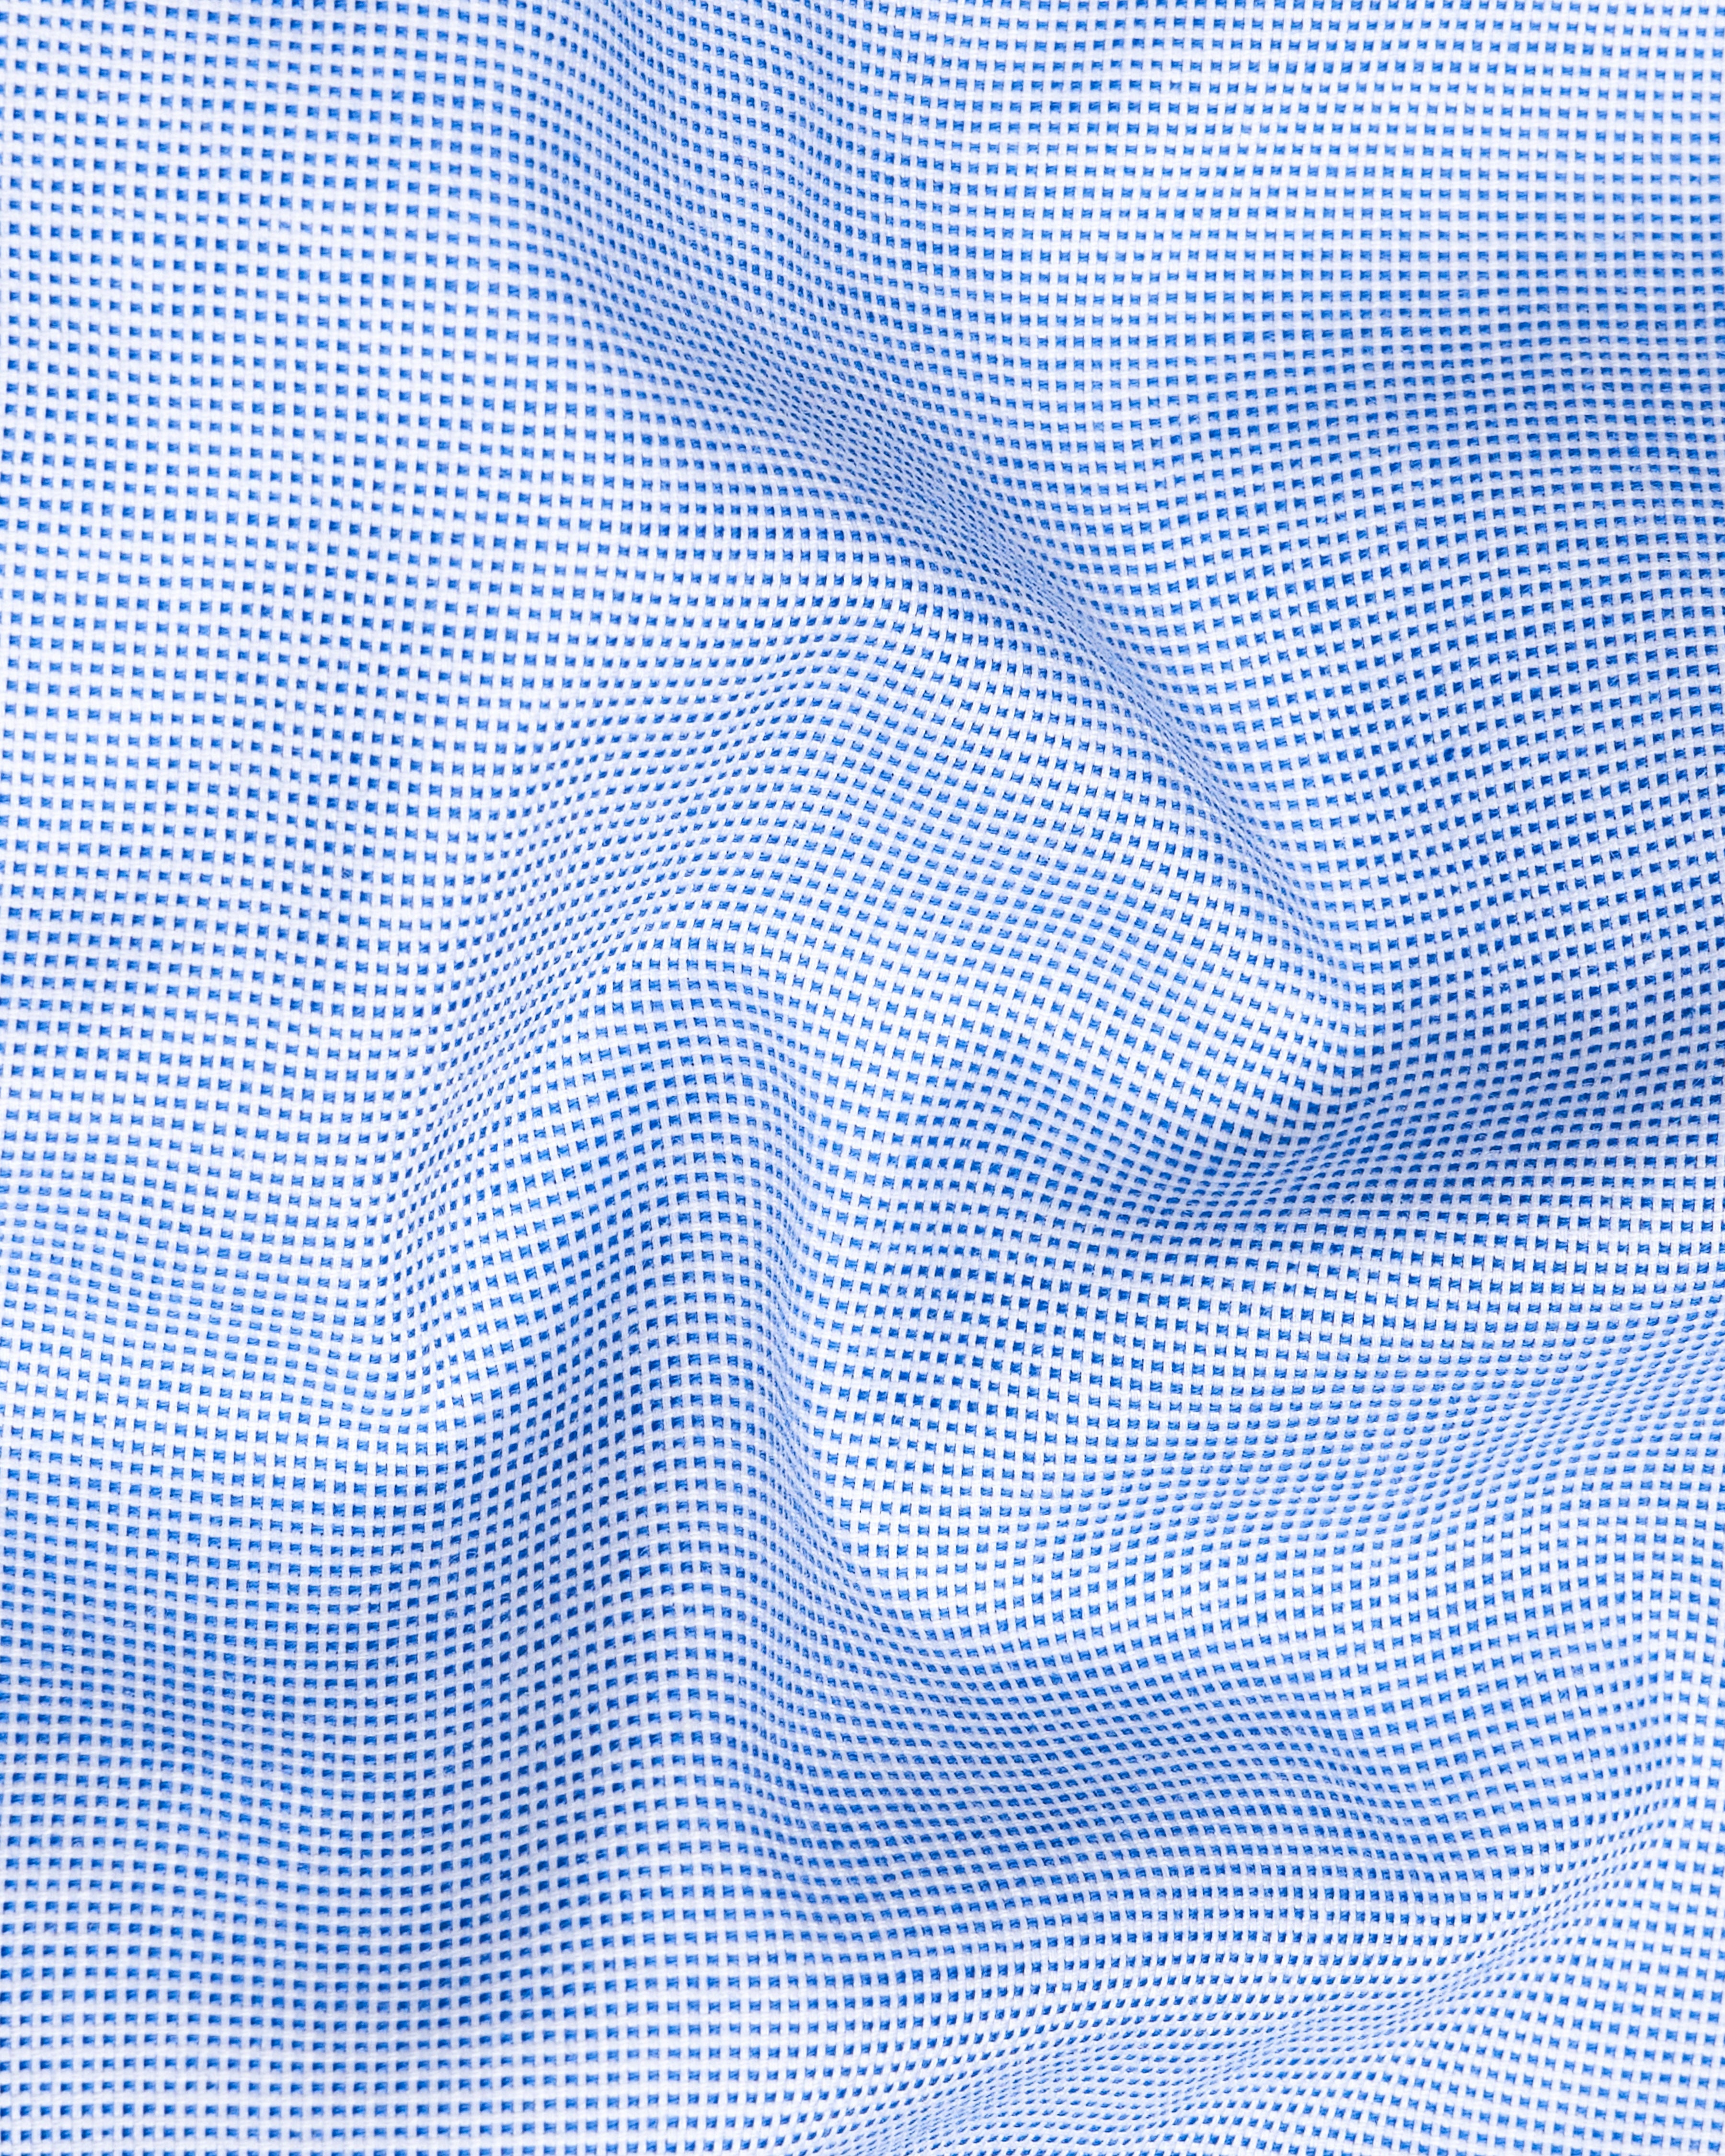 Periwinkle Blue Dobby Textured Premium Giza Cotton Shirt 9905-CLOTH-P-38, 9905-CLOTH-P-H-38, 9905-CLOTH-P-39, 9905-CLOTH-P-H-39, 9905-CLOTH-P-40, 9905-CLOTH-P-H-40, 9905-CLOTH-P-42, 9905-CLOTH-P-H-42, 9905-CLOTH-P-44, 9905-CLOTH-P-H-44, 9905-CLOTH-P-46, 9905-CLOTH-P-H-46, 9905-CLOTH-P-48, 9905-CLOTH-P-H-48, 9905-CLOTH-P-50, 9905-CLOTH-P-H-50, 9905-CLOTH-P-52, 9905-CLOTH-P-H-52